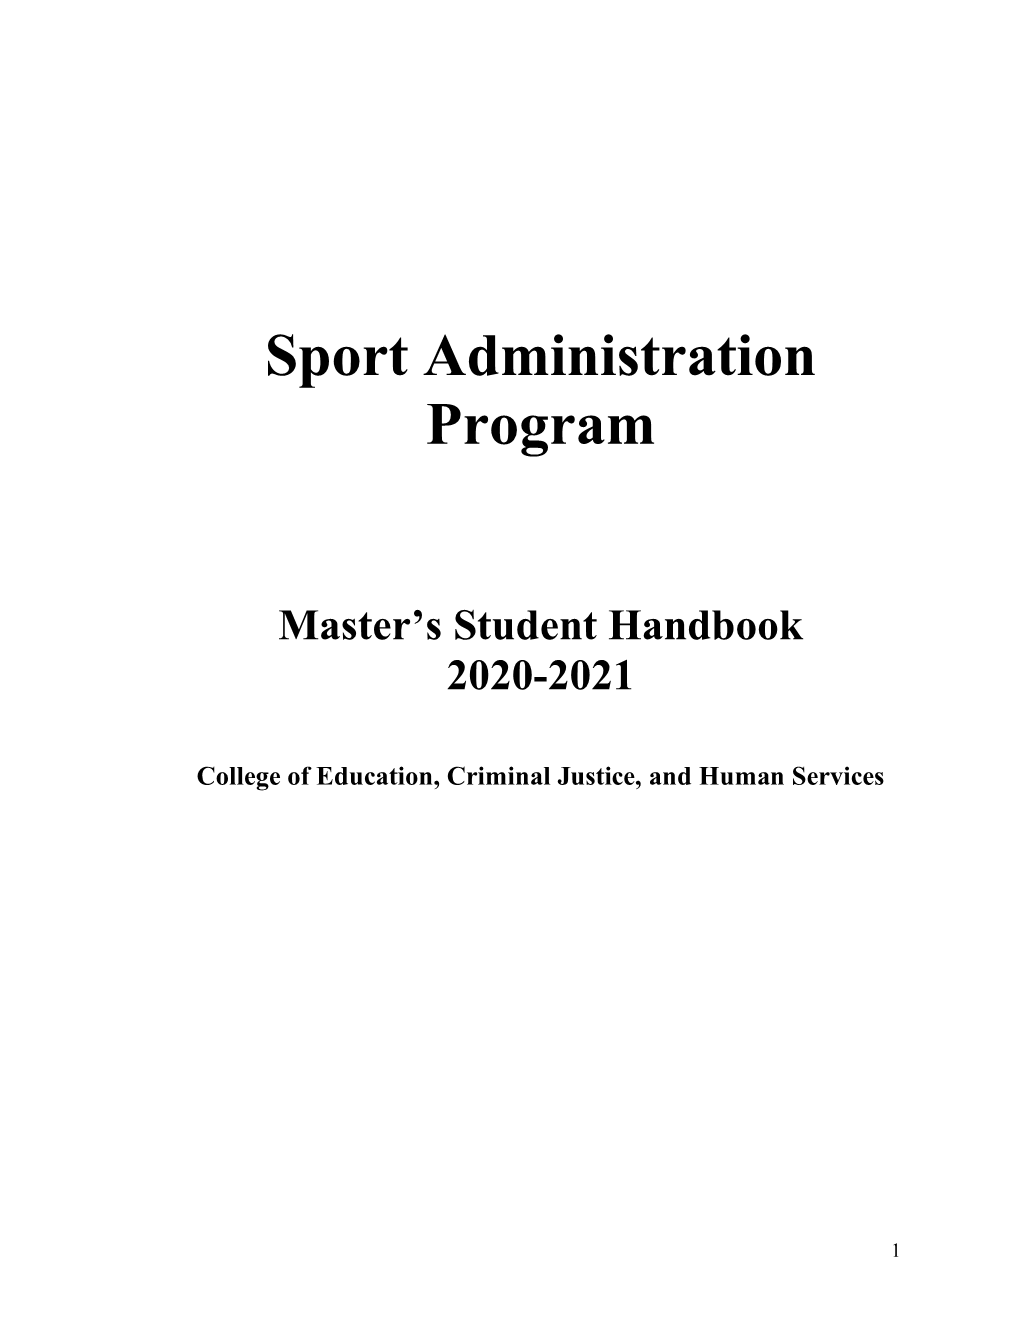 Sport Administration Program